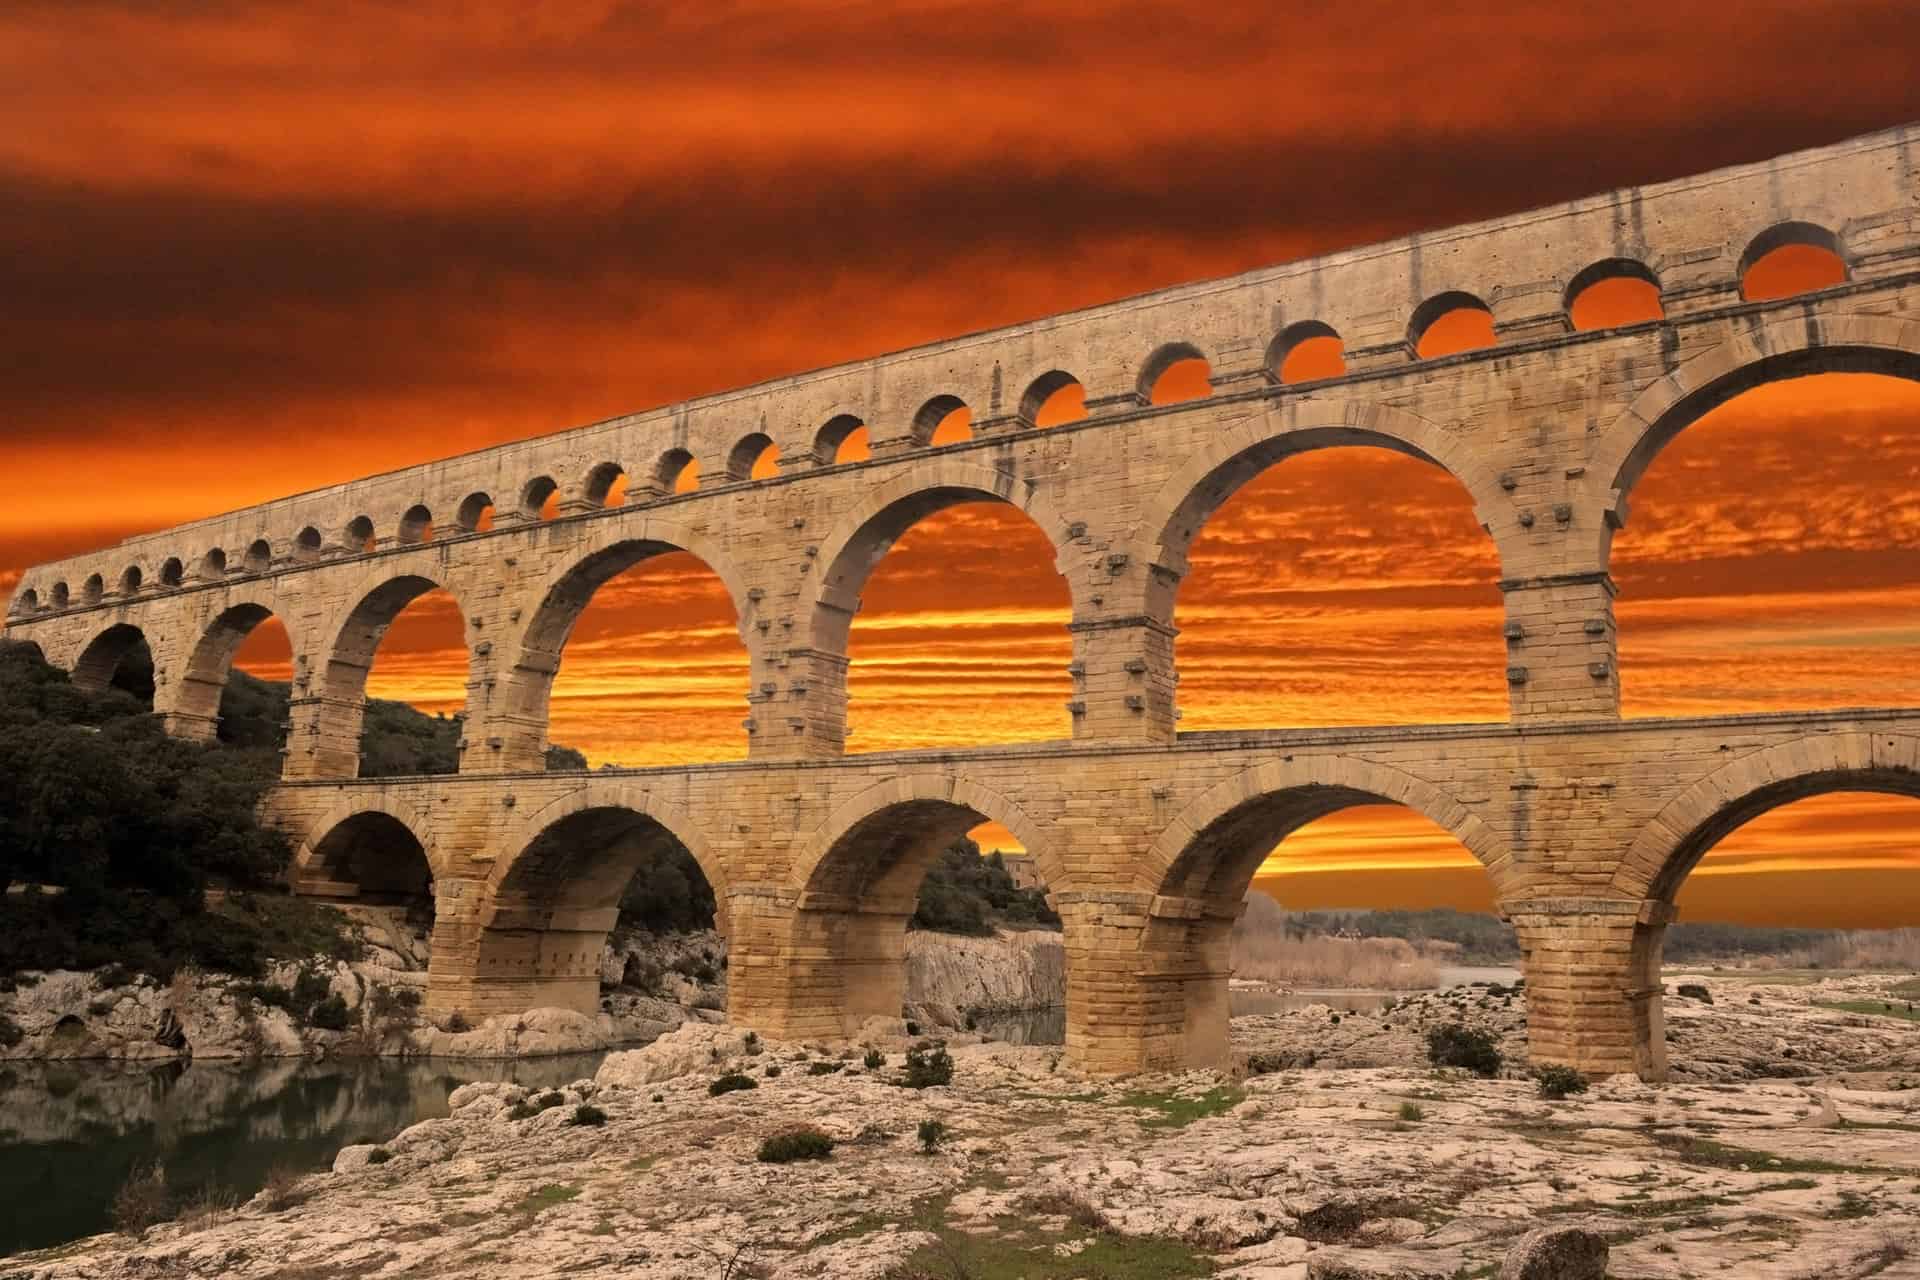 Pont Du Gard with orange sunset in sky